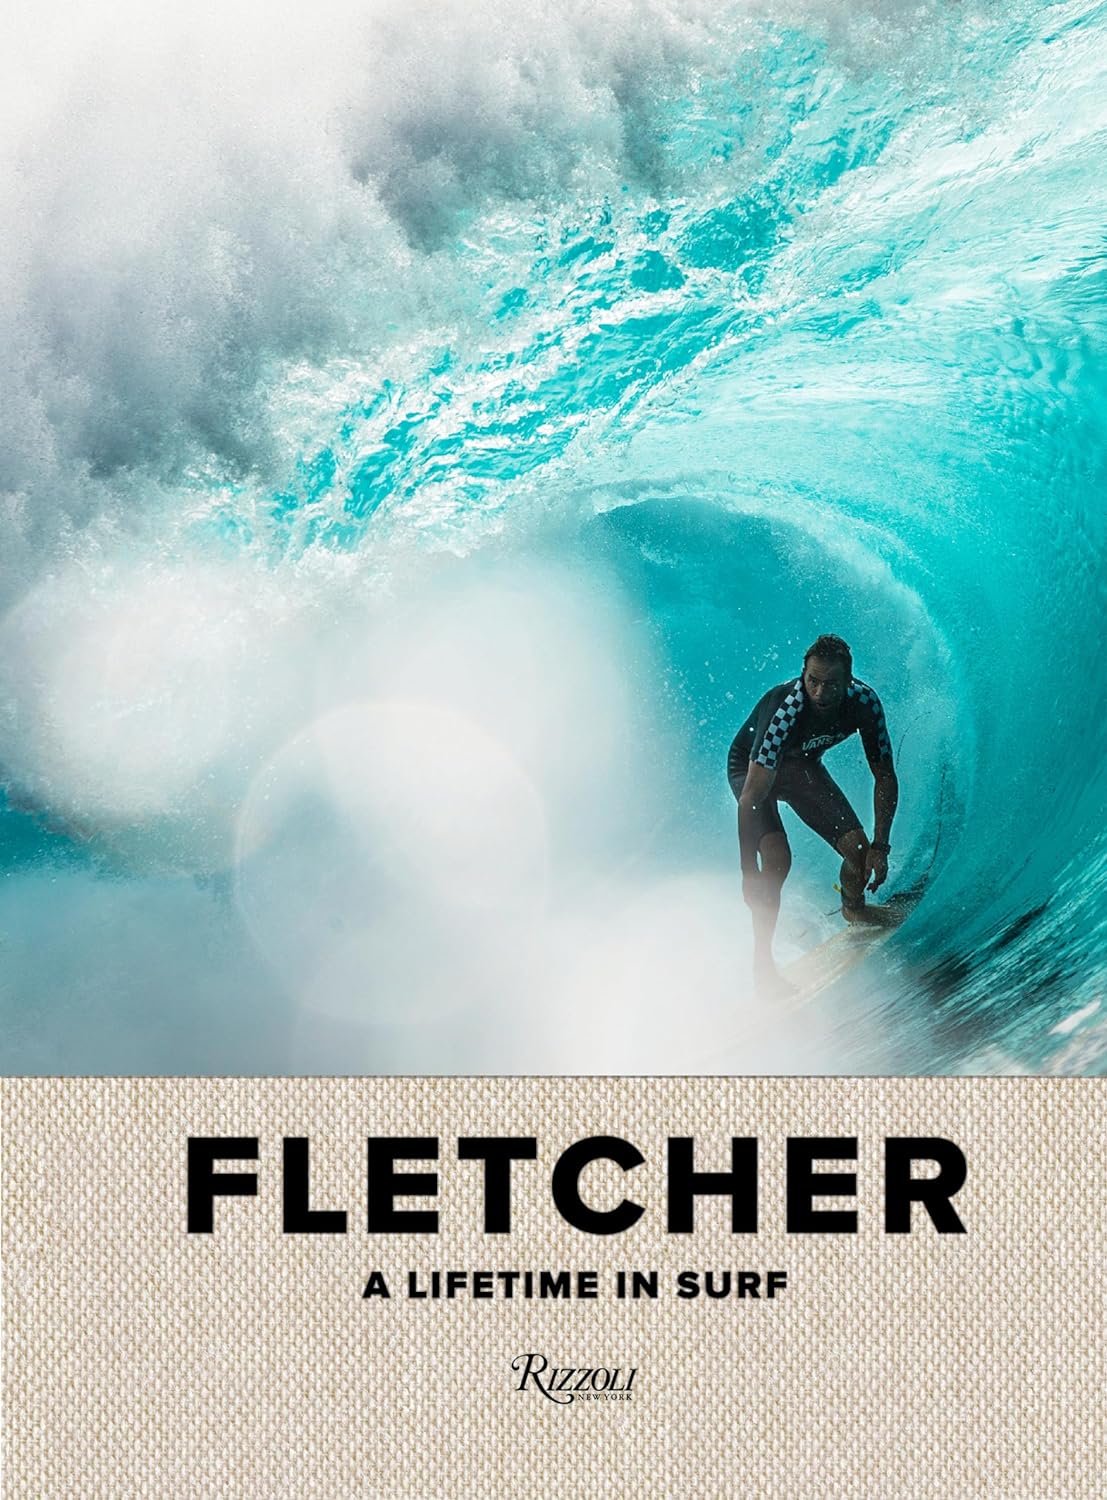 Fletcher - A Lifetime in Surf